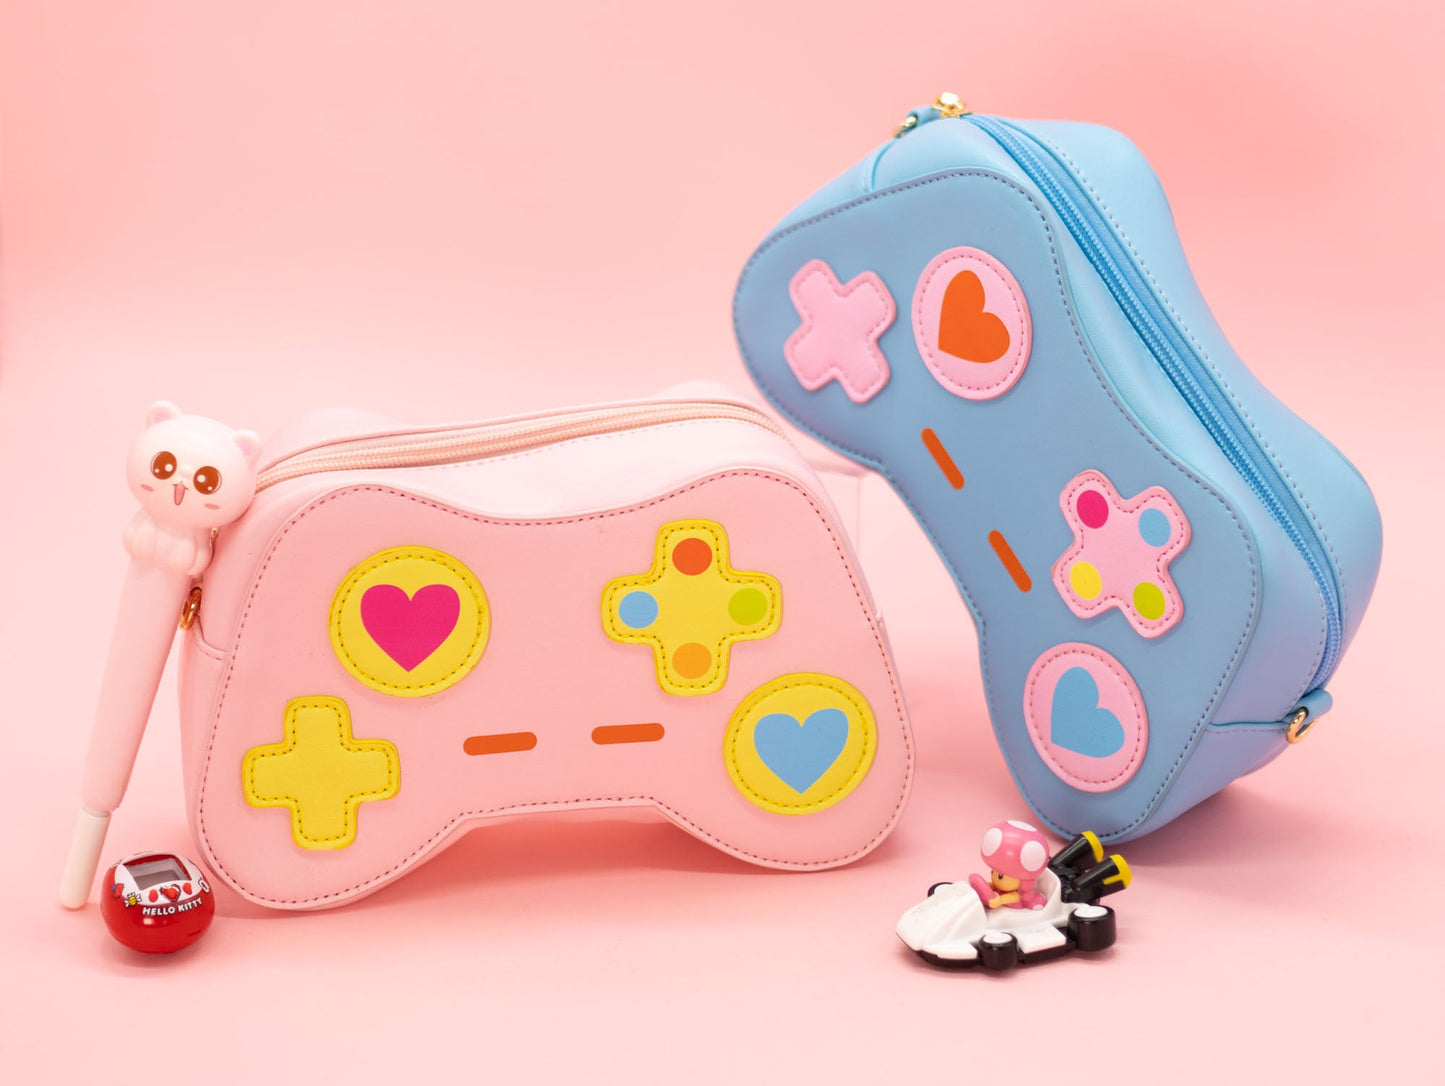 SALE! One More Level Game Controller Handbag - Pink